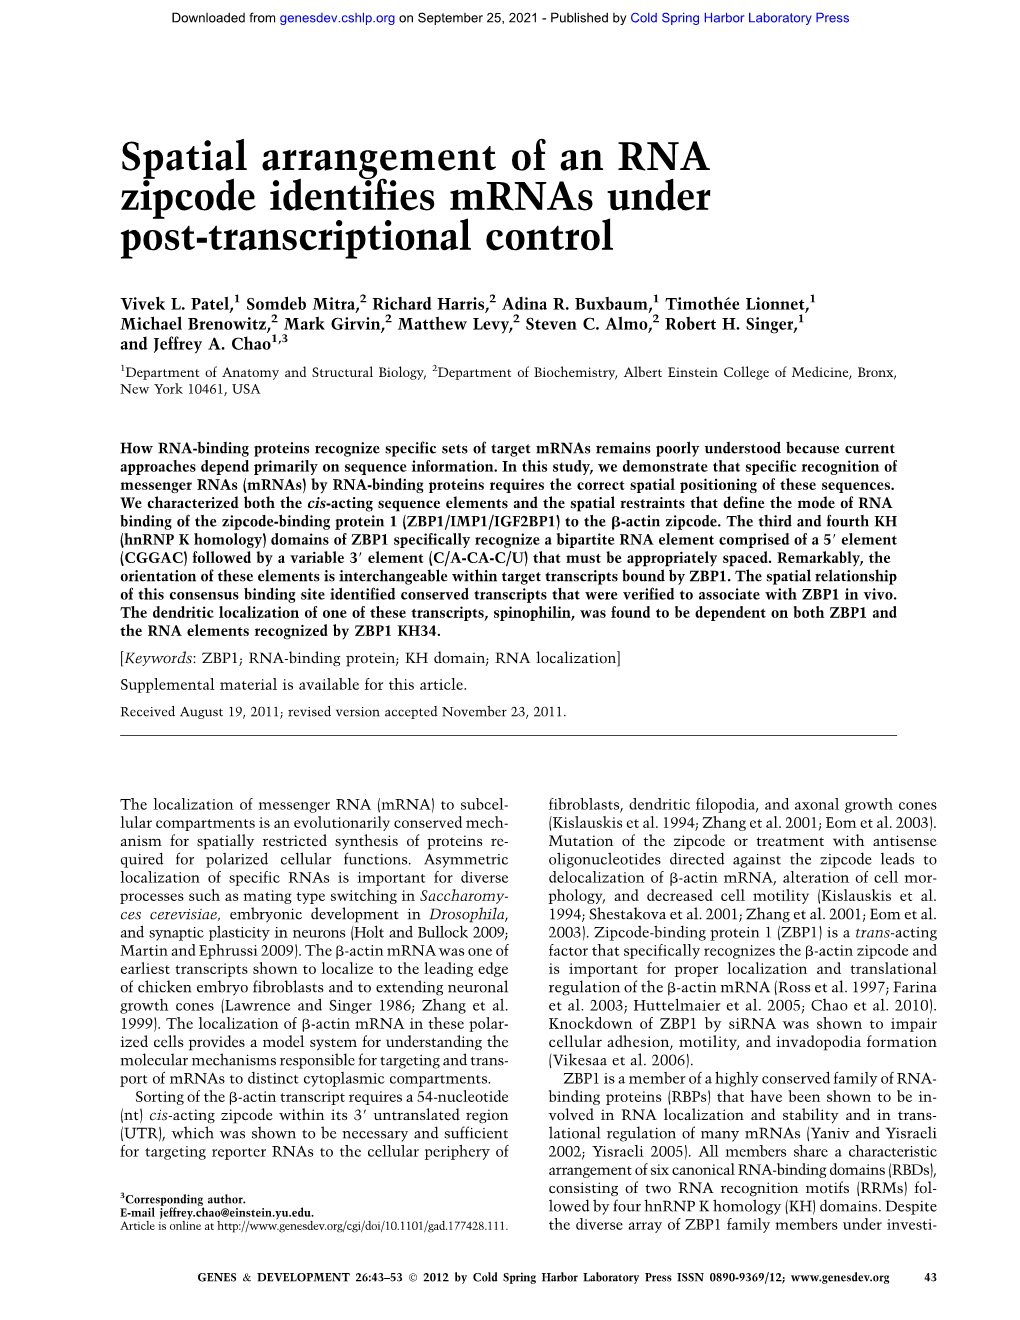 Spatial Arrangement of an RNA Zipcode Identifies Mrnas Under Post-Transcriptional Control